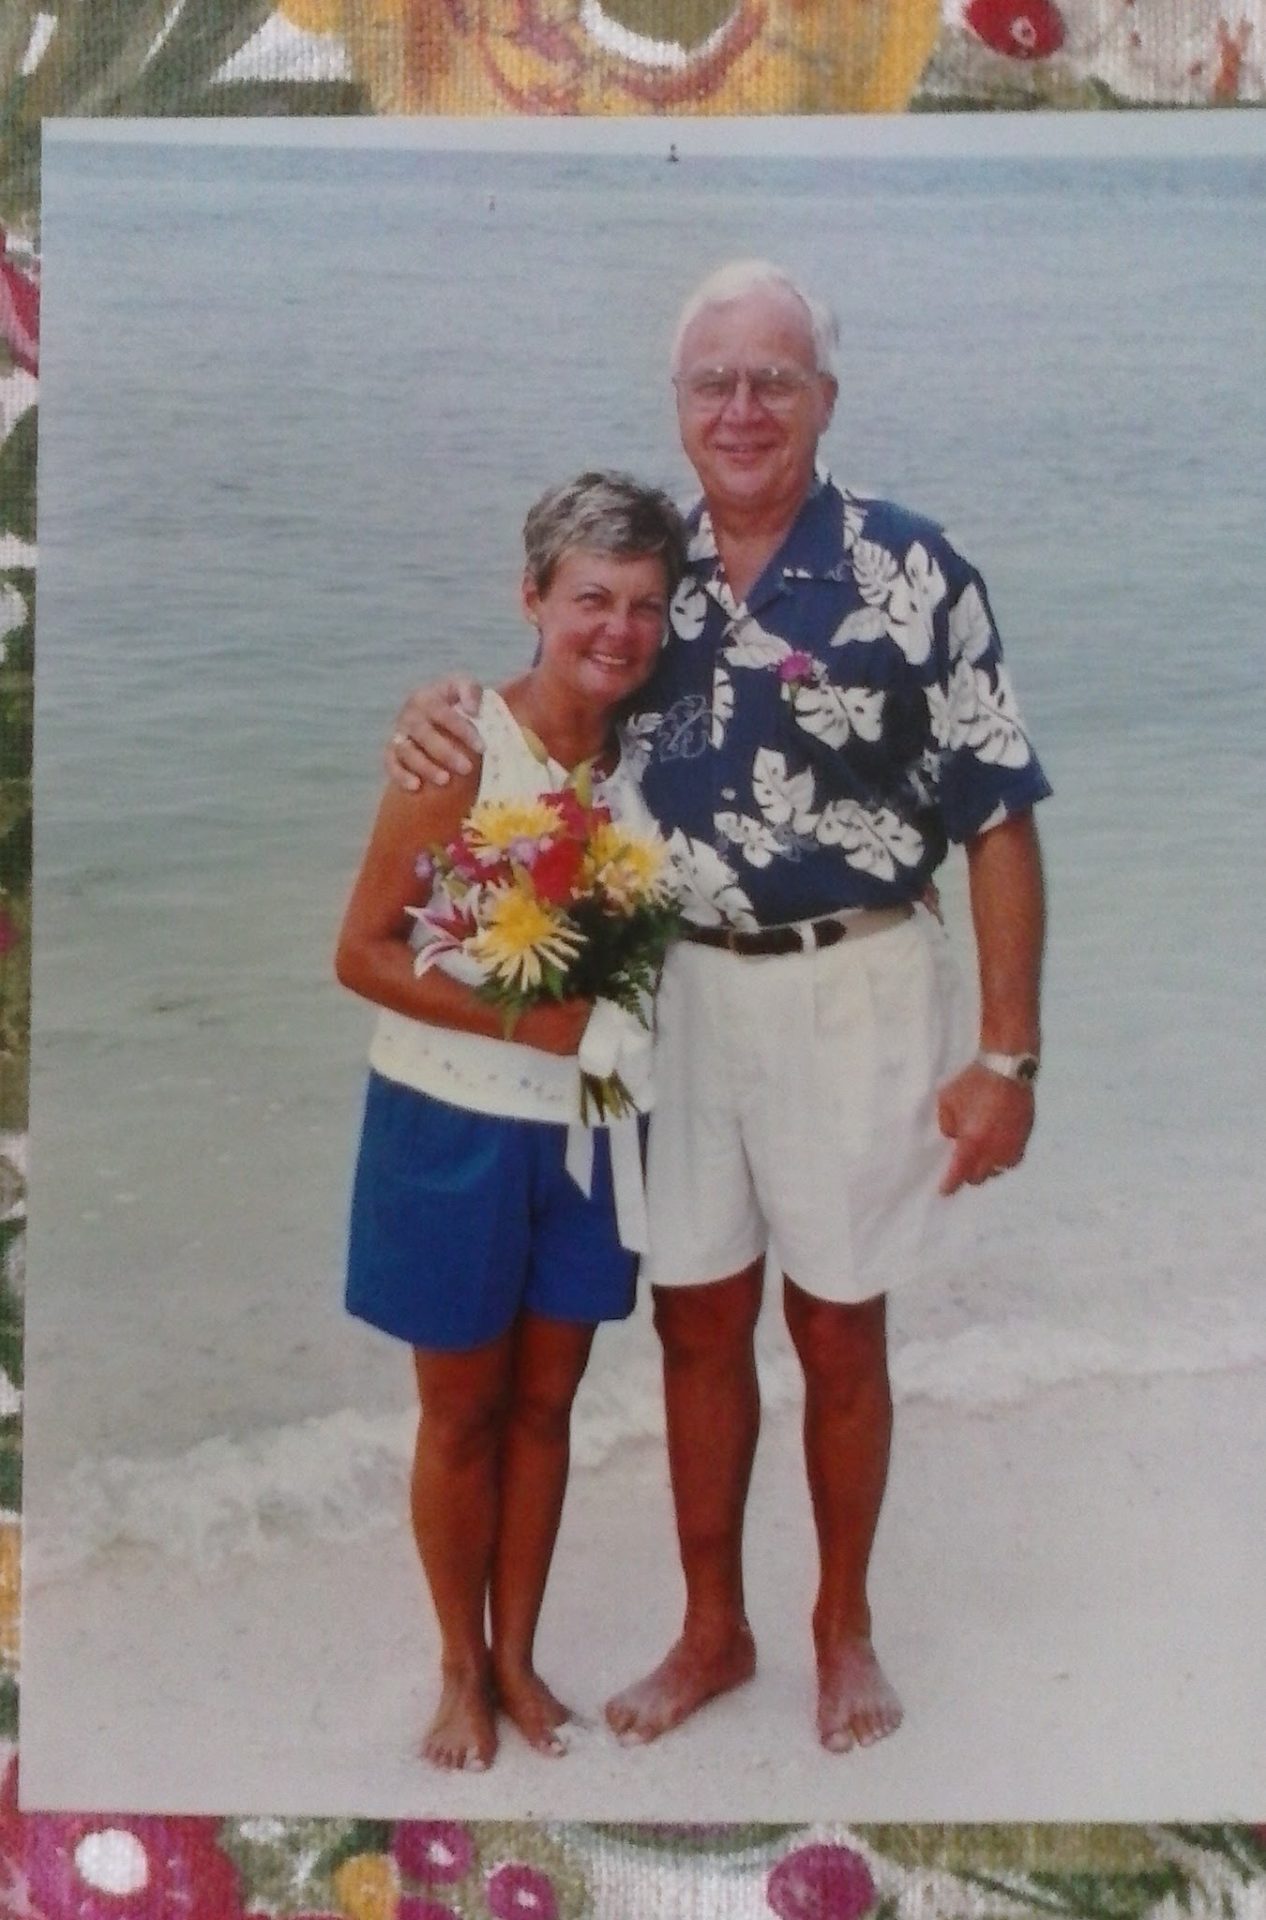 Pop Bill and Meemaw's Wedding in Key West, Florida<br />
*June 1999*